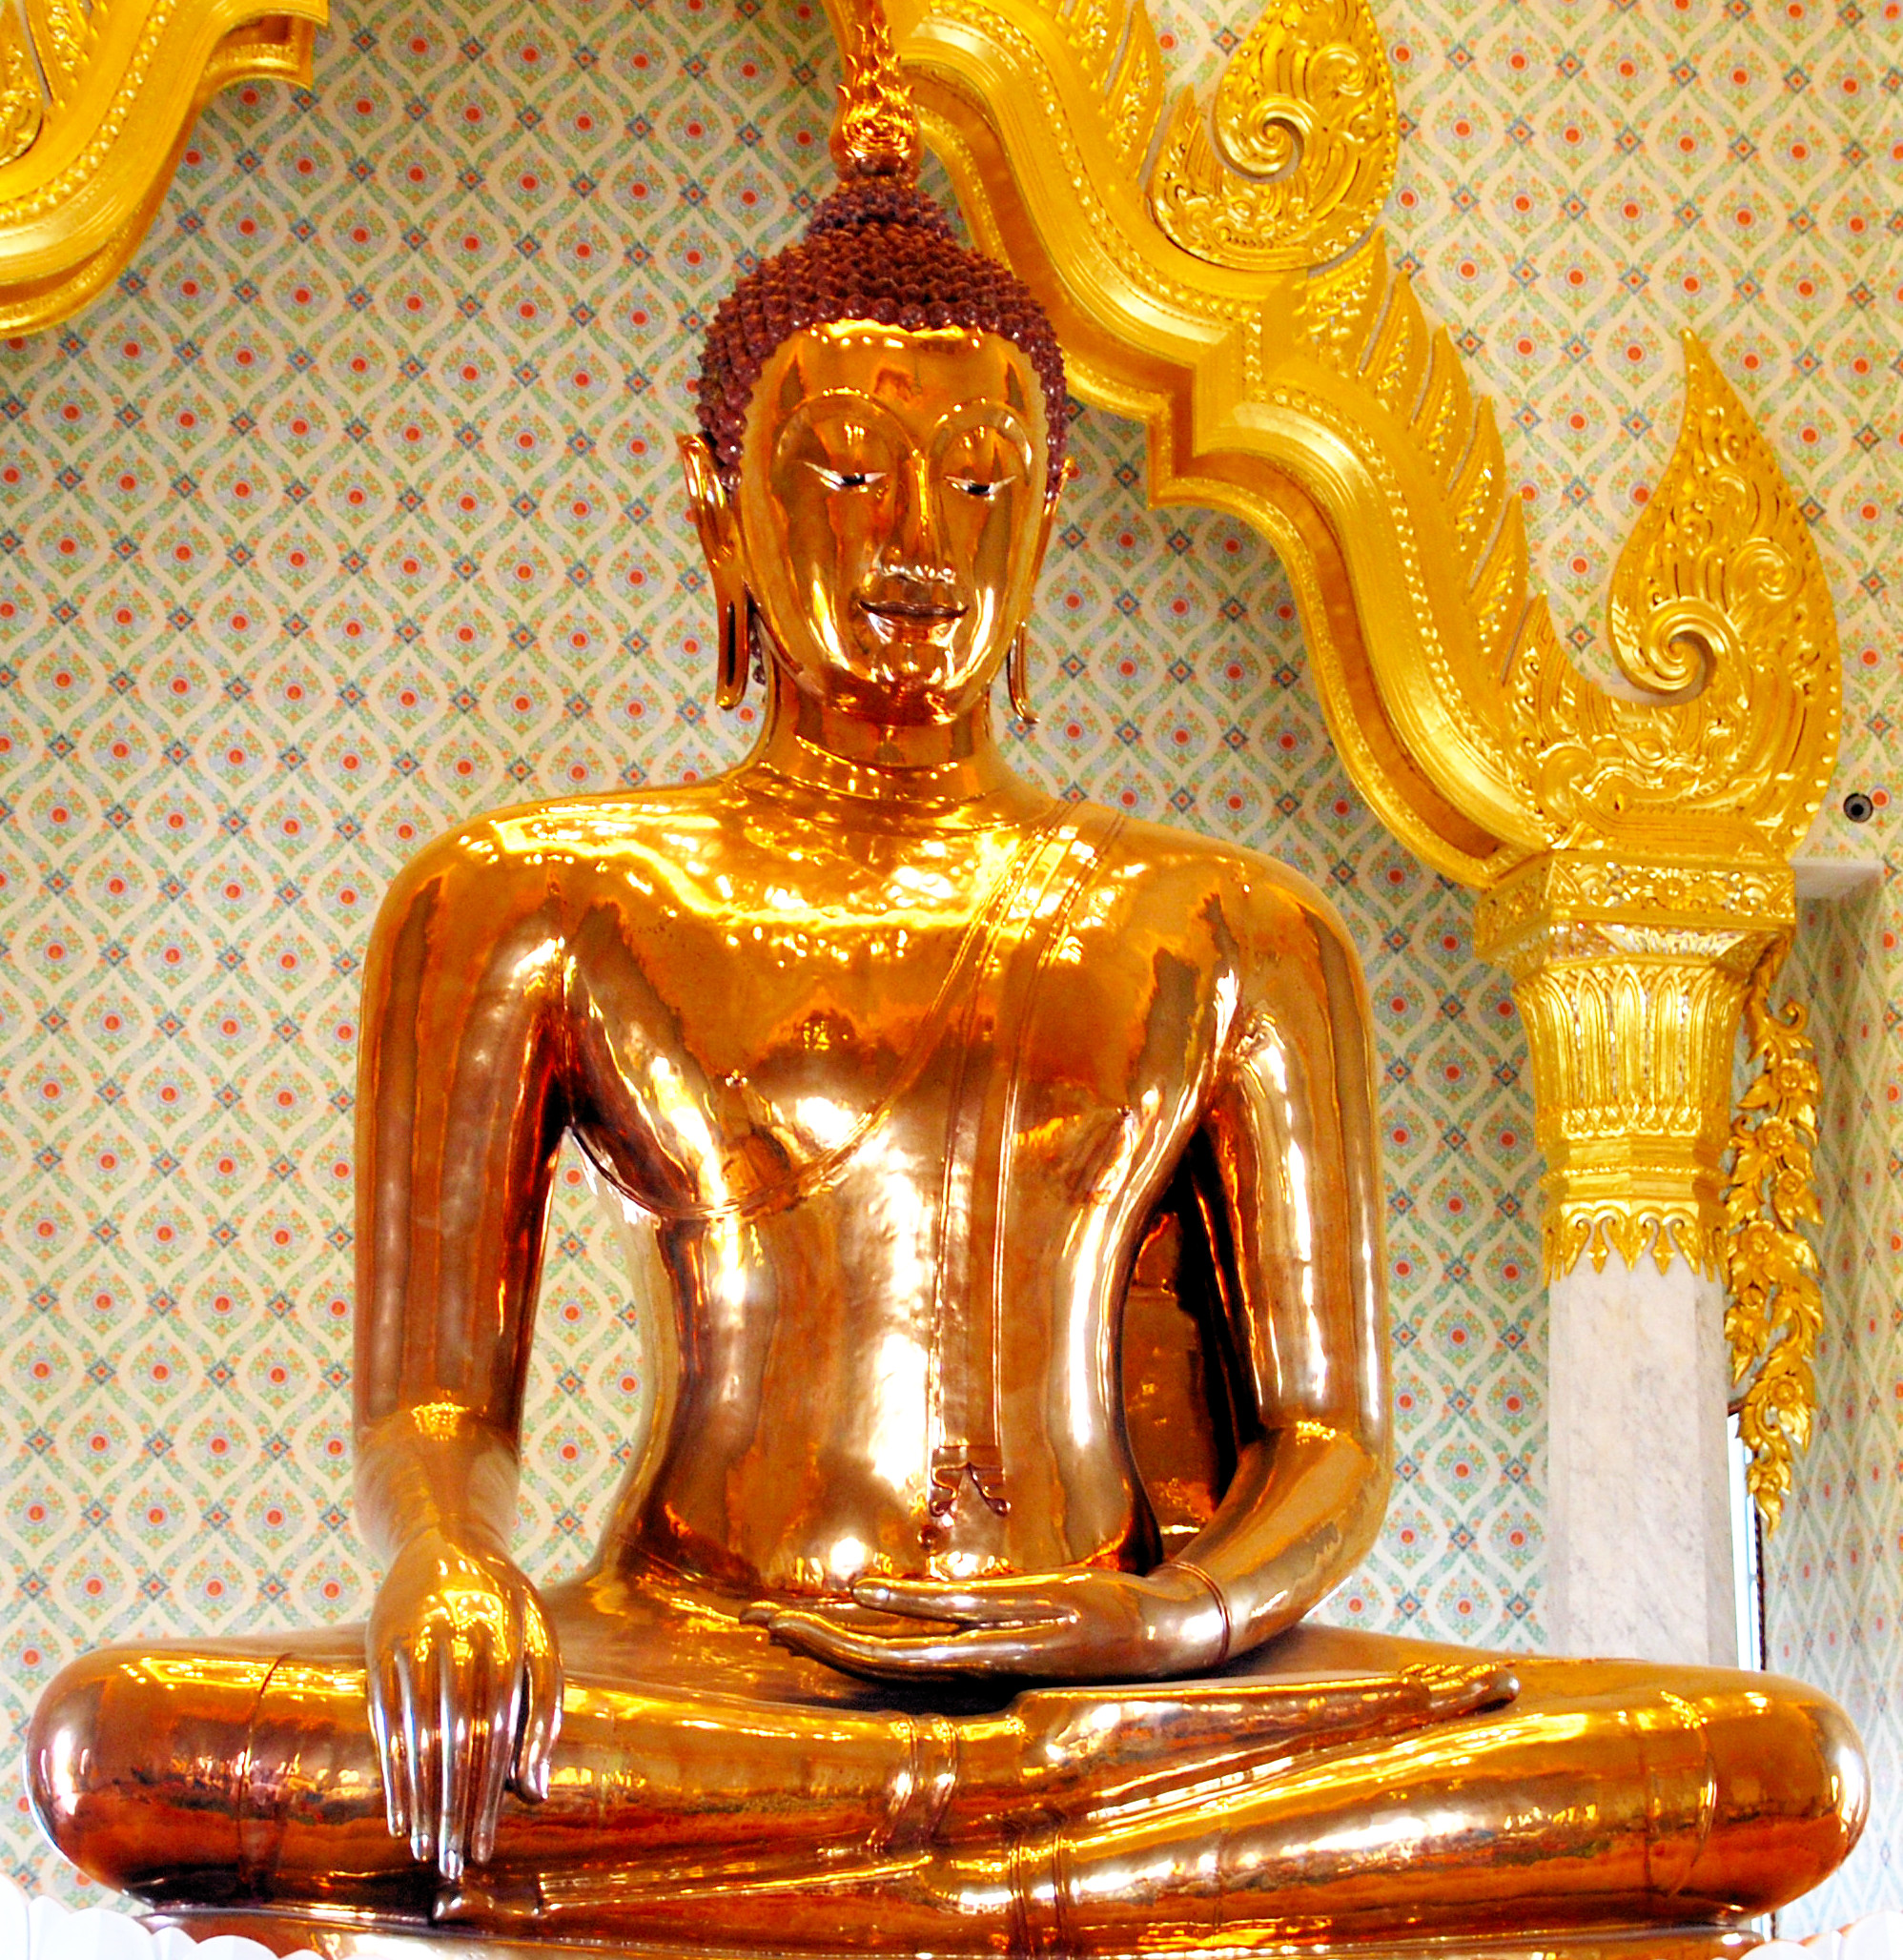 File:Golden Buddha statue at Wat Traimit.jpg - Wikimedia Commons